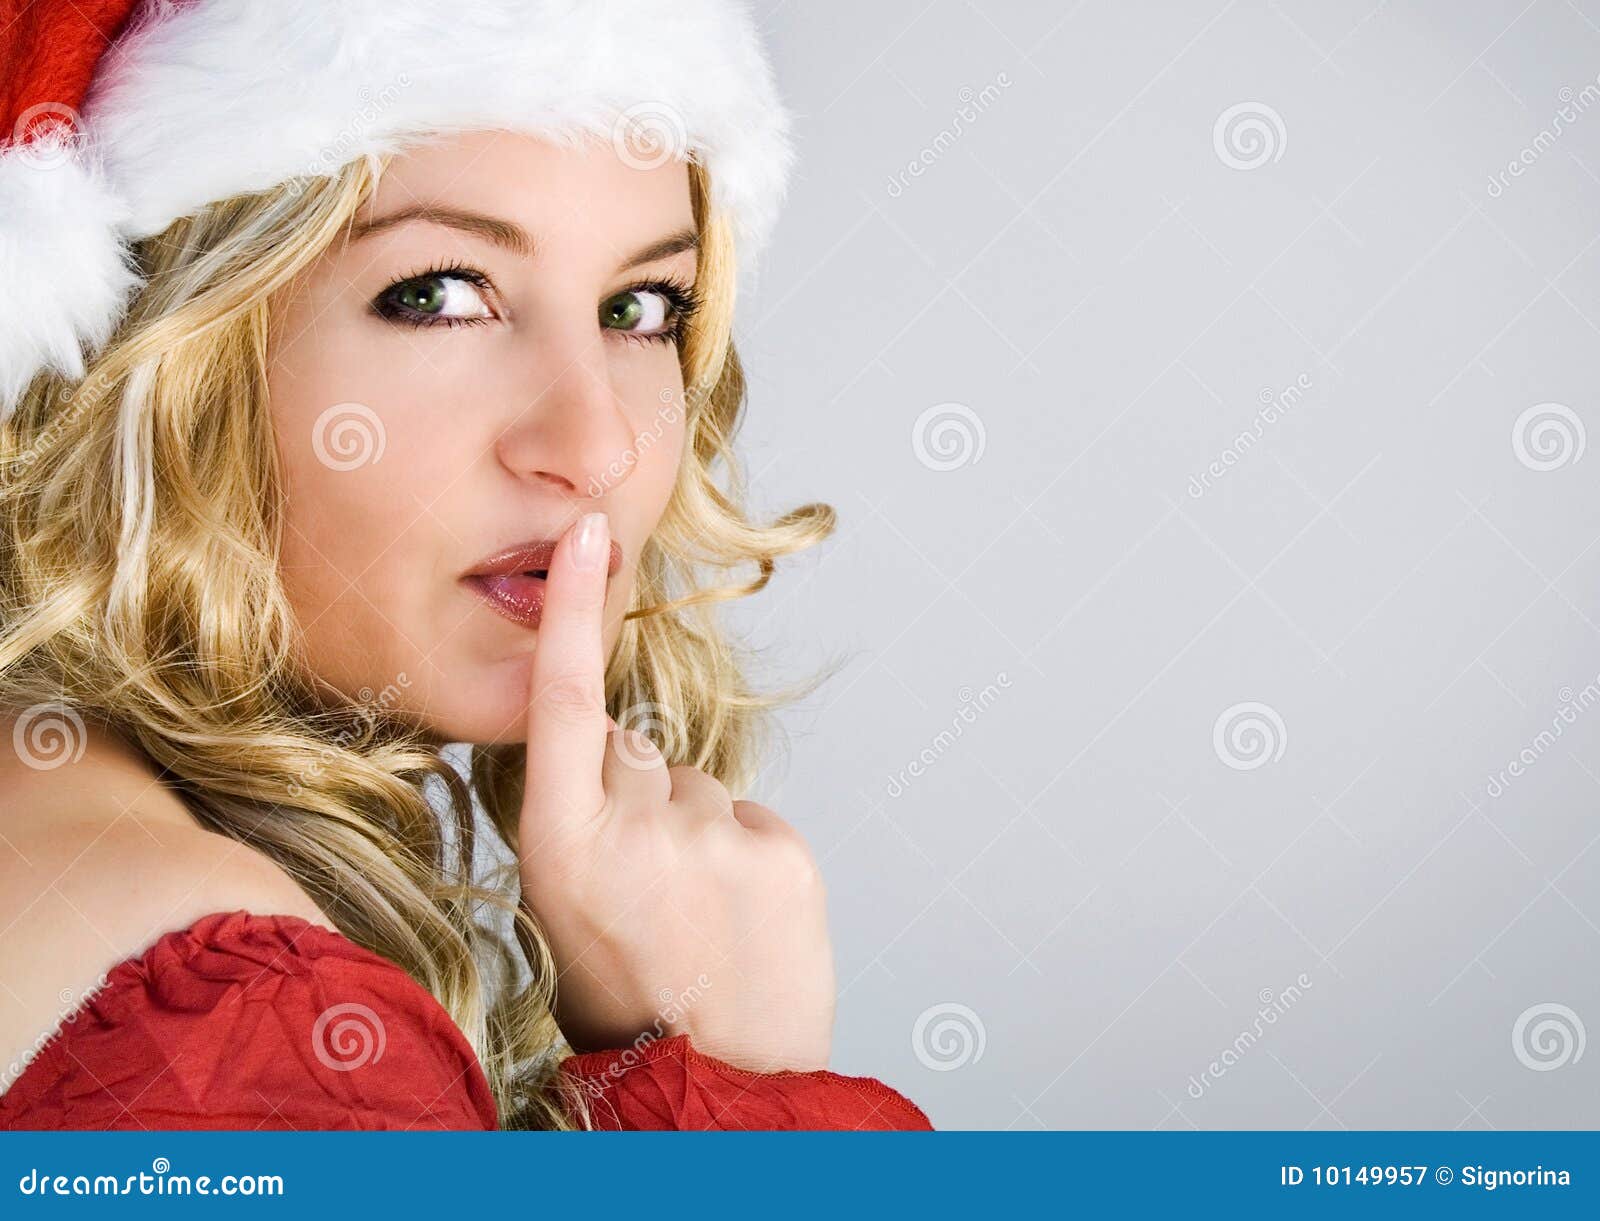 Santa 1 1 Stock Image Image Of Female Attractive Erotic